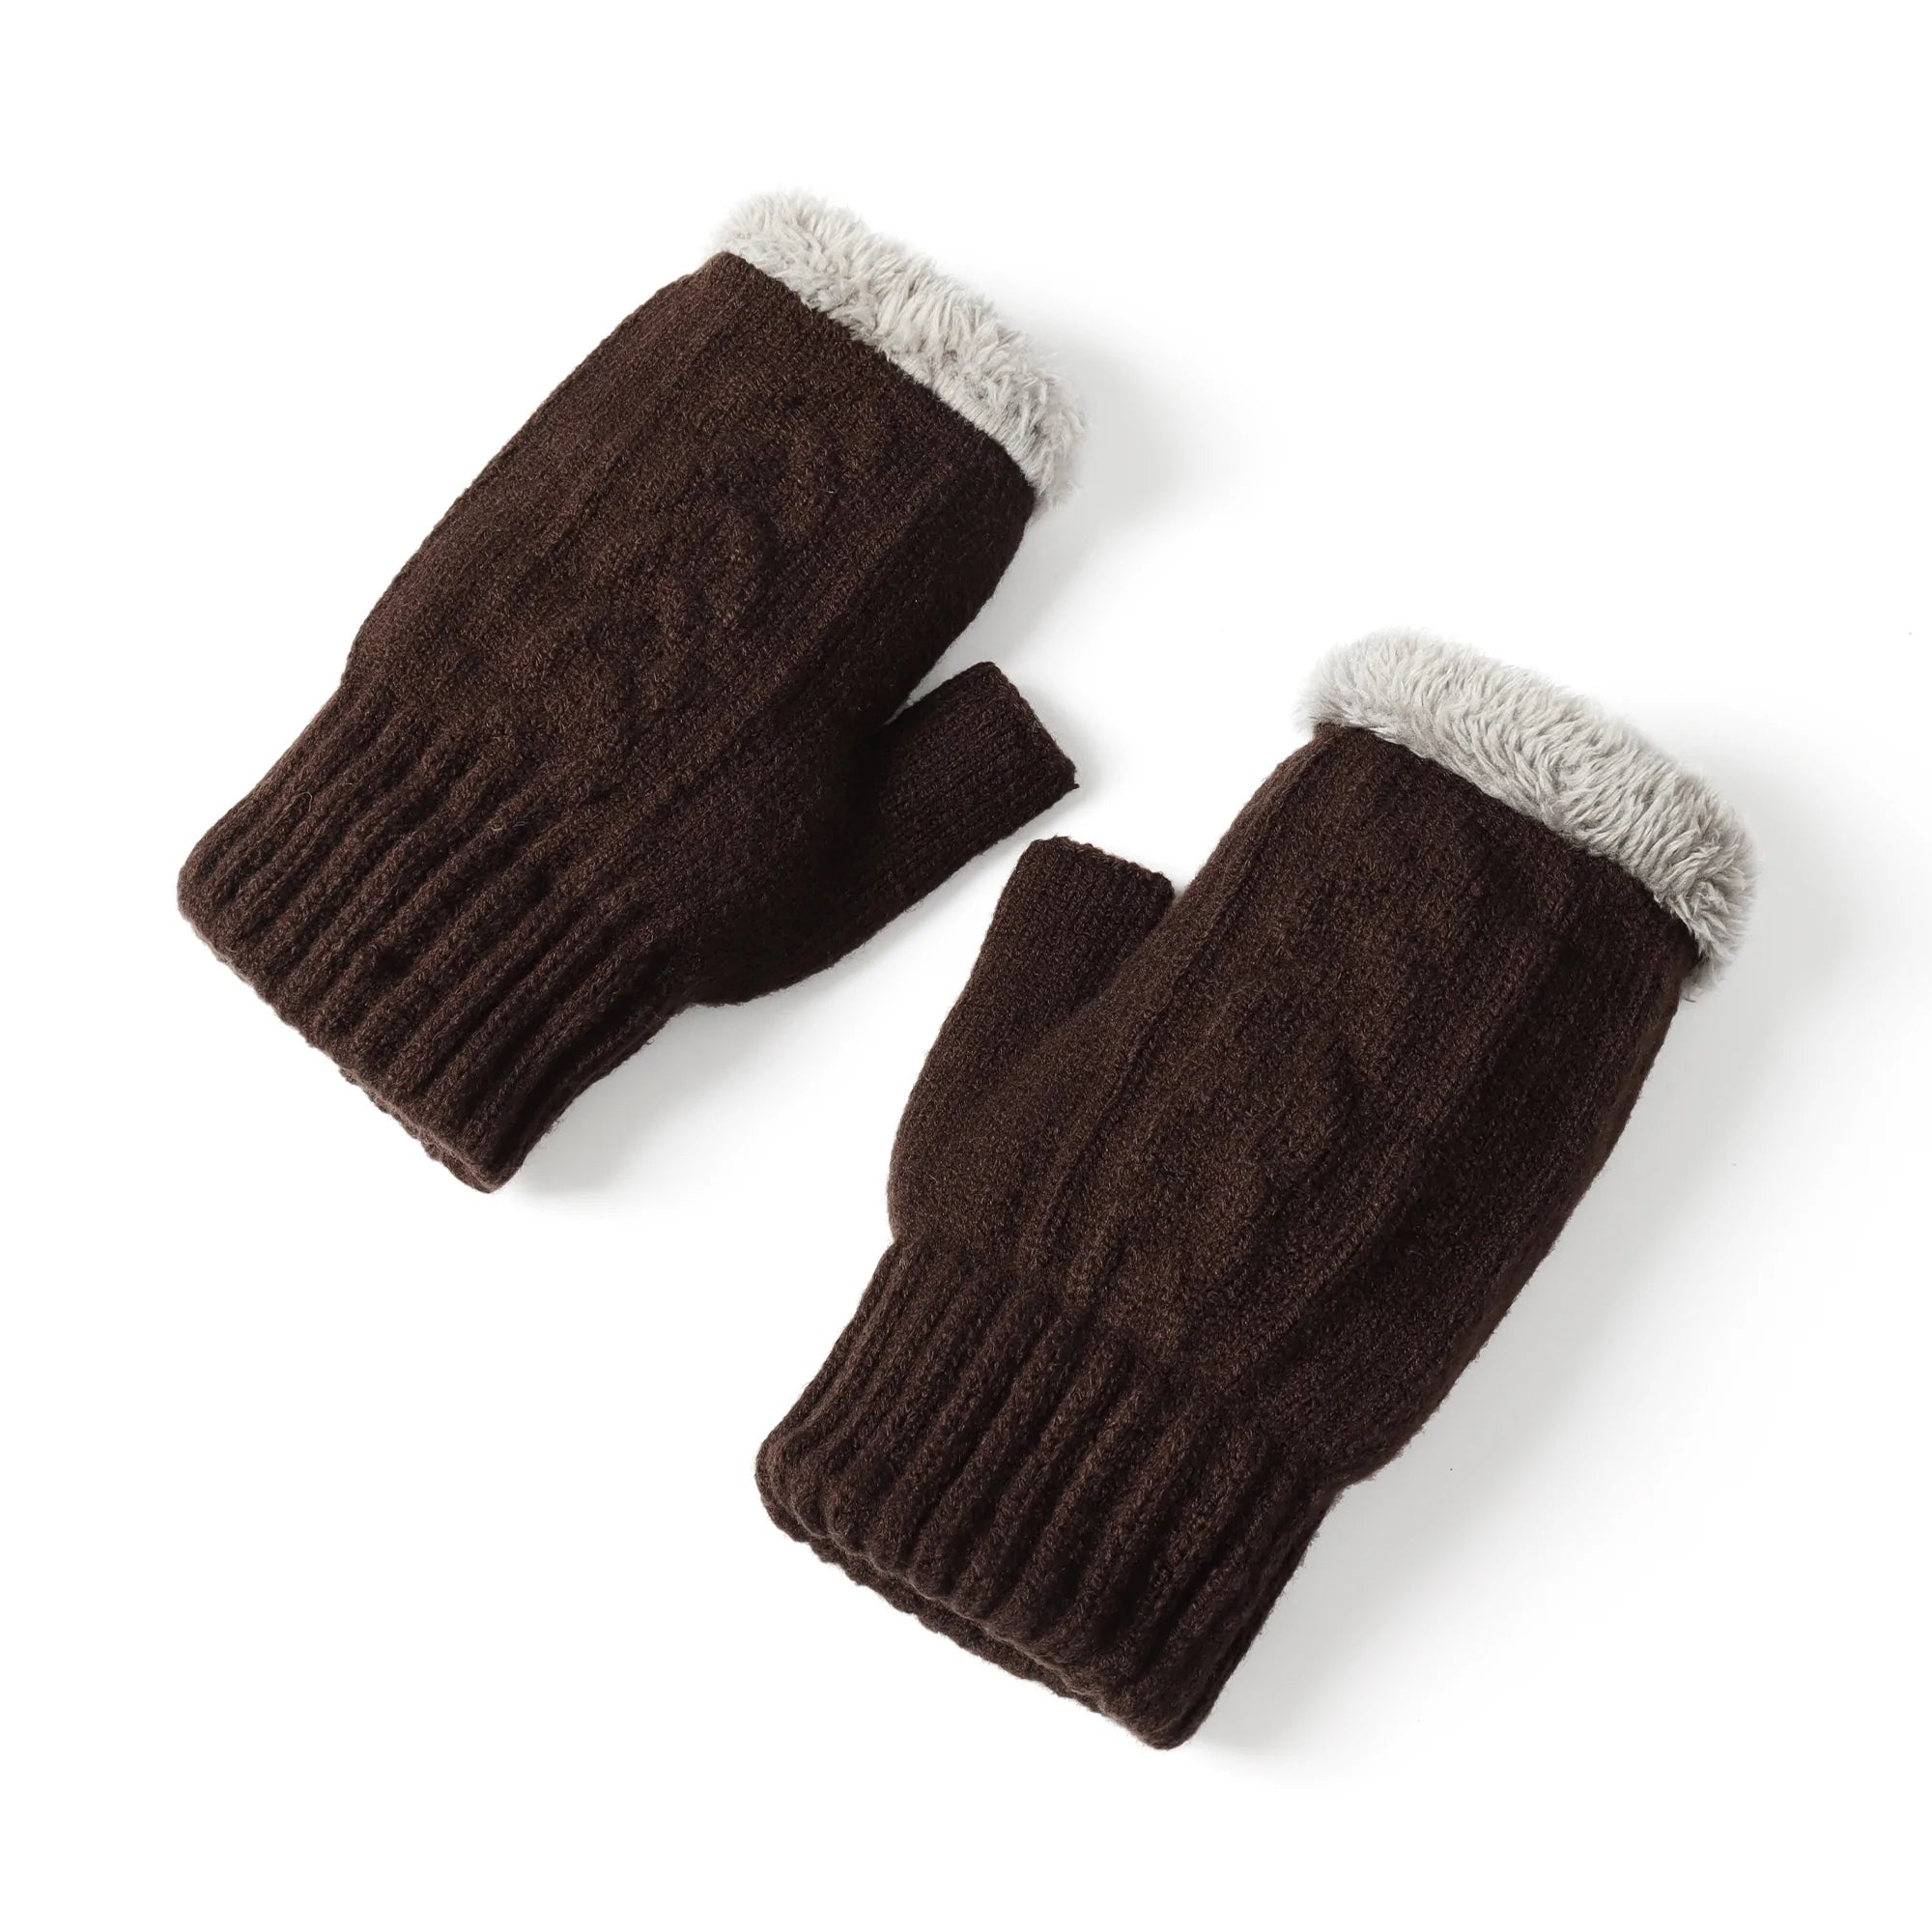  - Fingerless Ultra Plush Knit Gloves - Original UGG Australia Classic